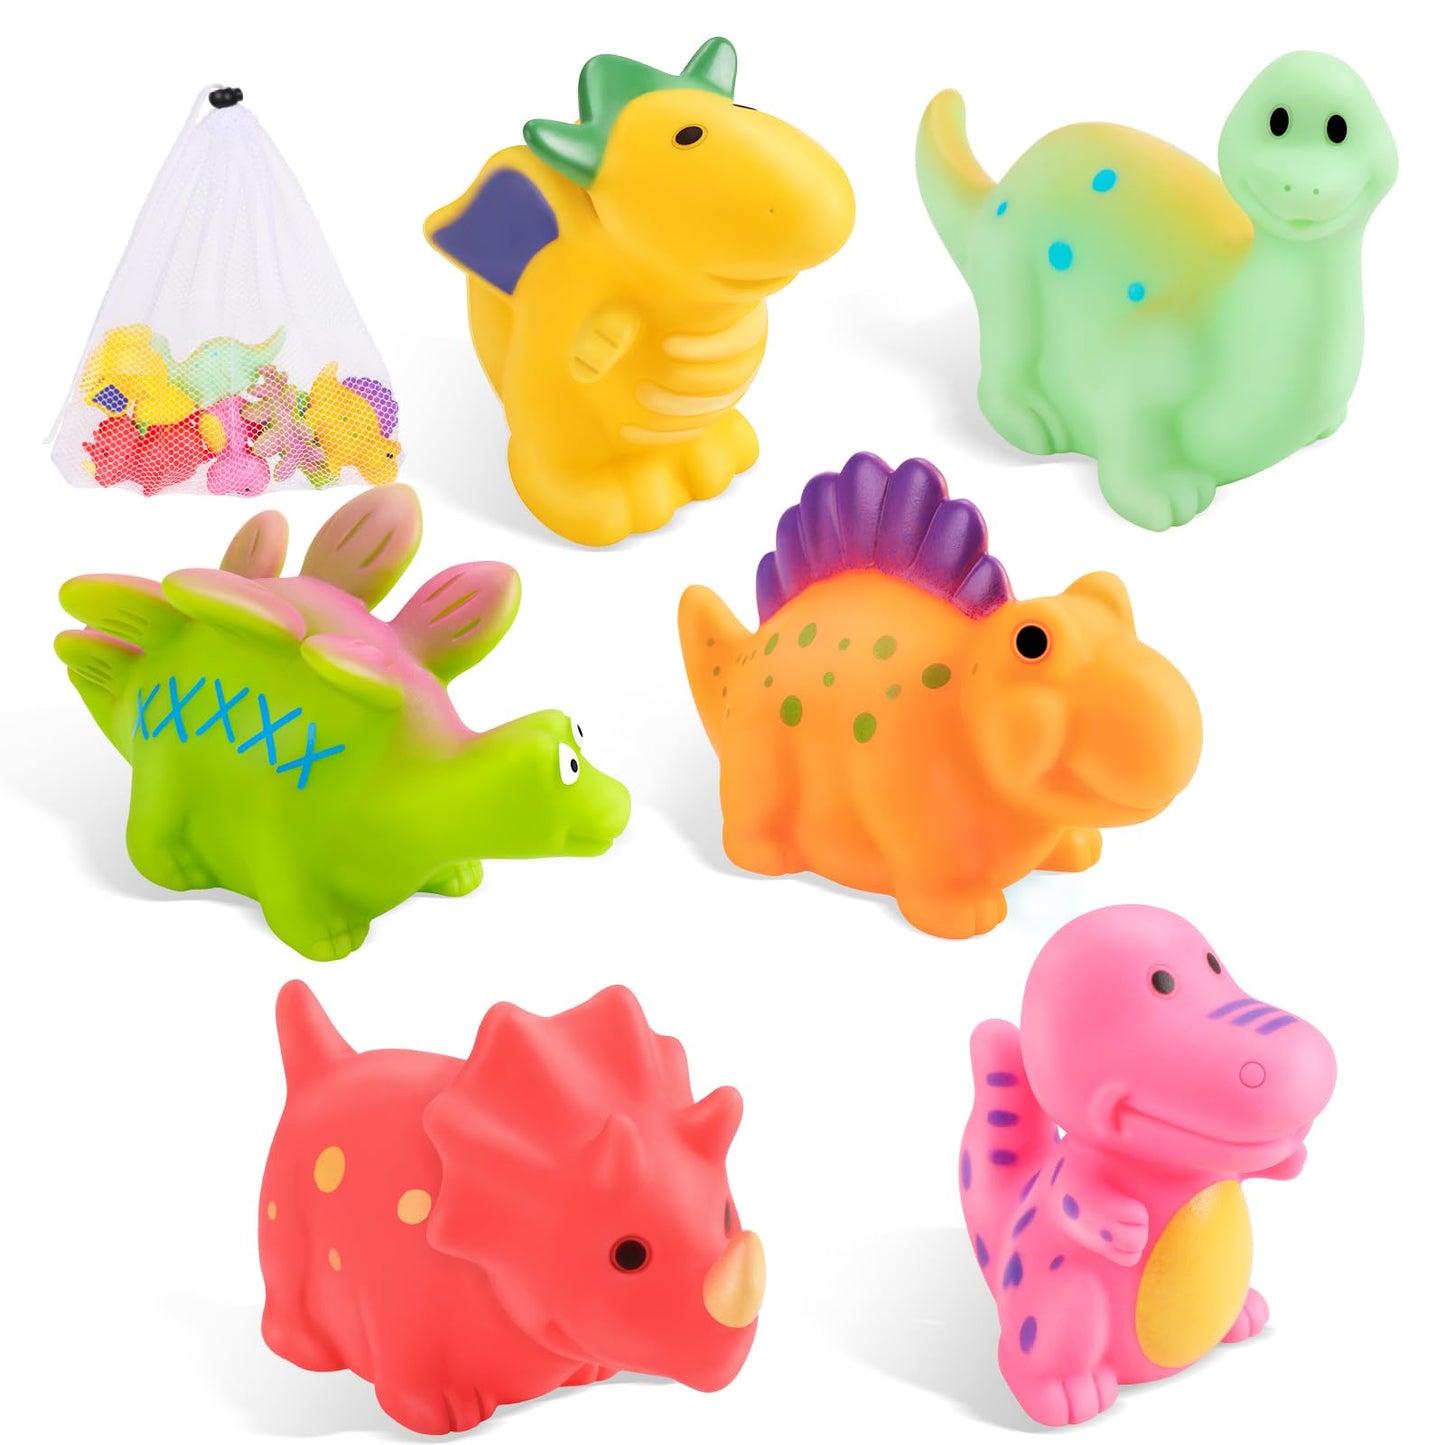 Whale Bath Toy Rechargeable with Dinosaur Bath Toys-Blue - Gigilli